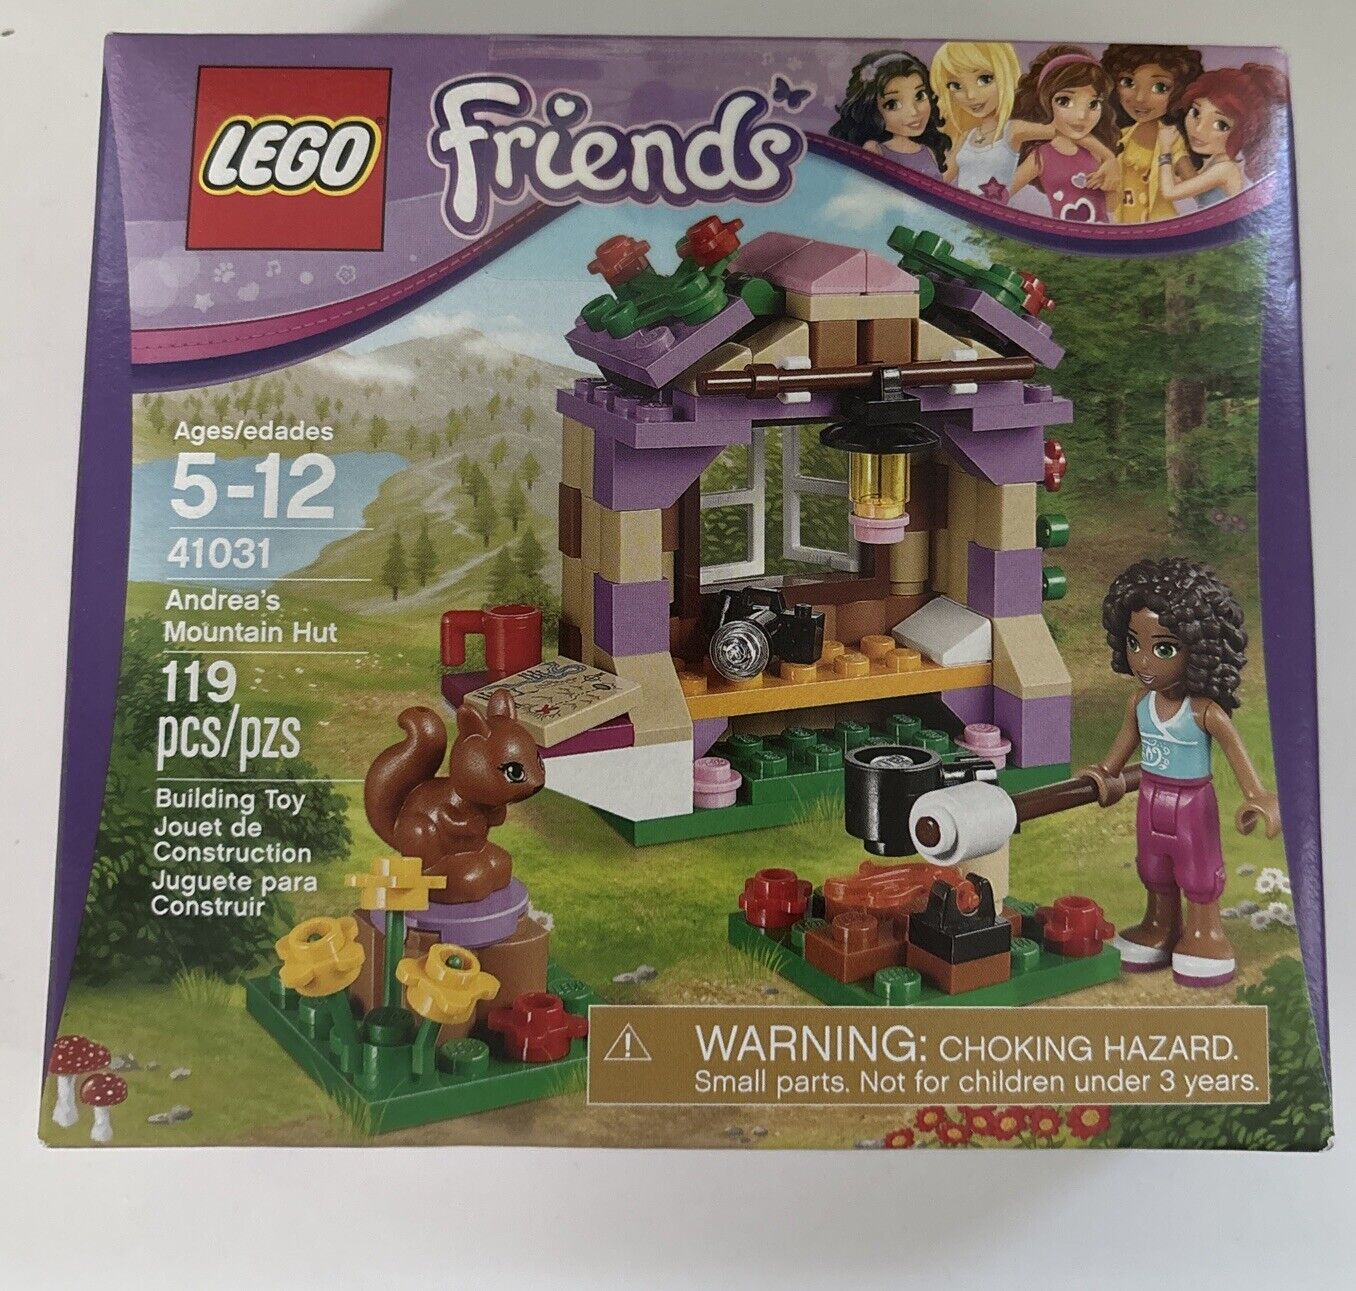 LEGO FRIENDS: Andrea's Mountain Hut (41031)